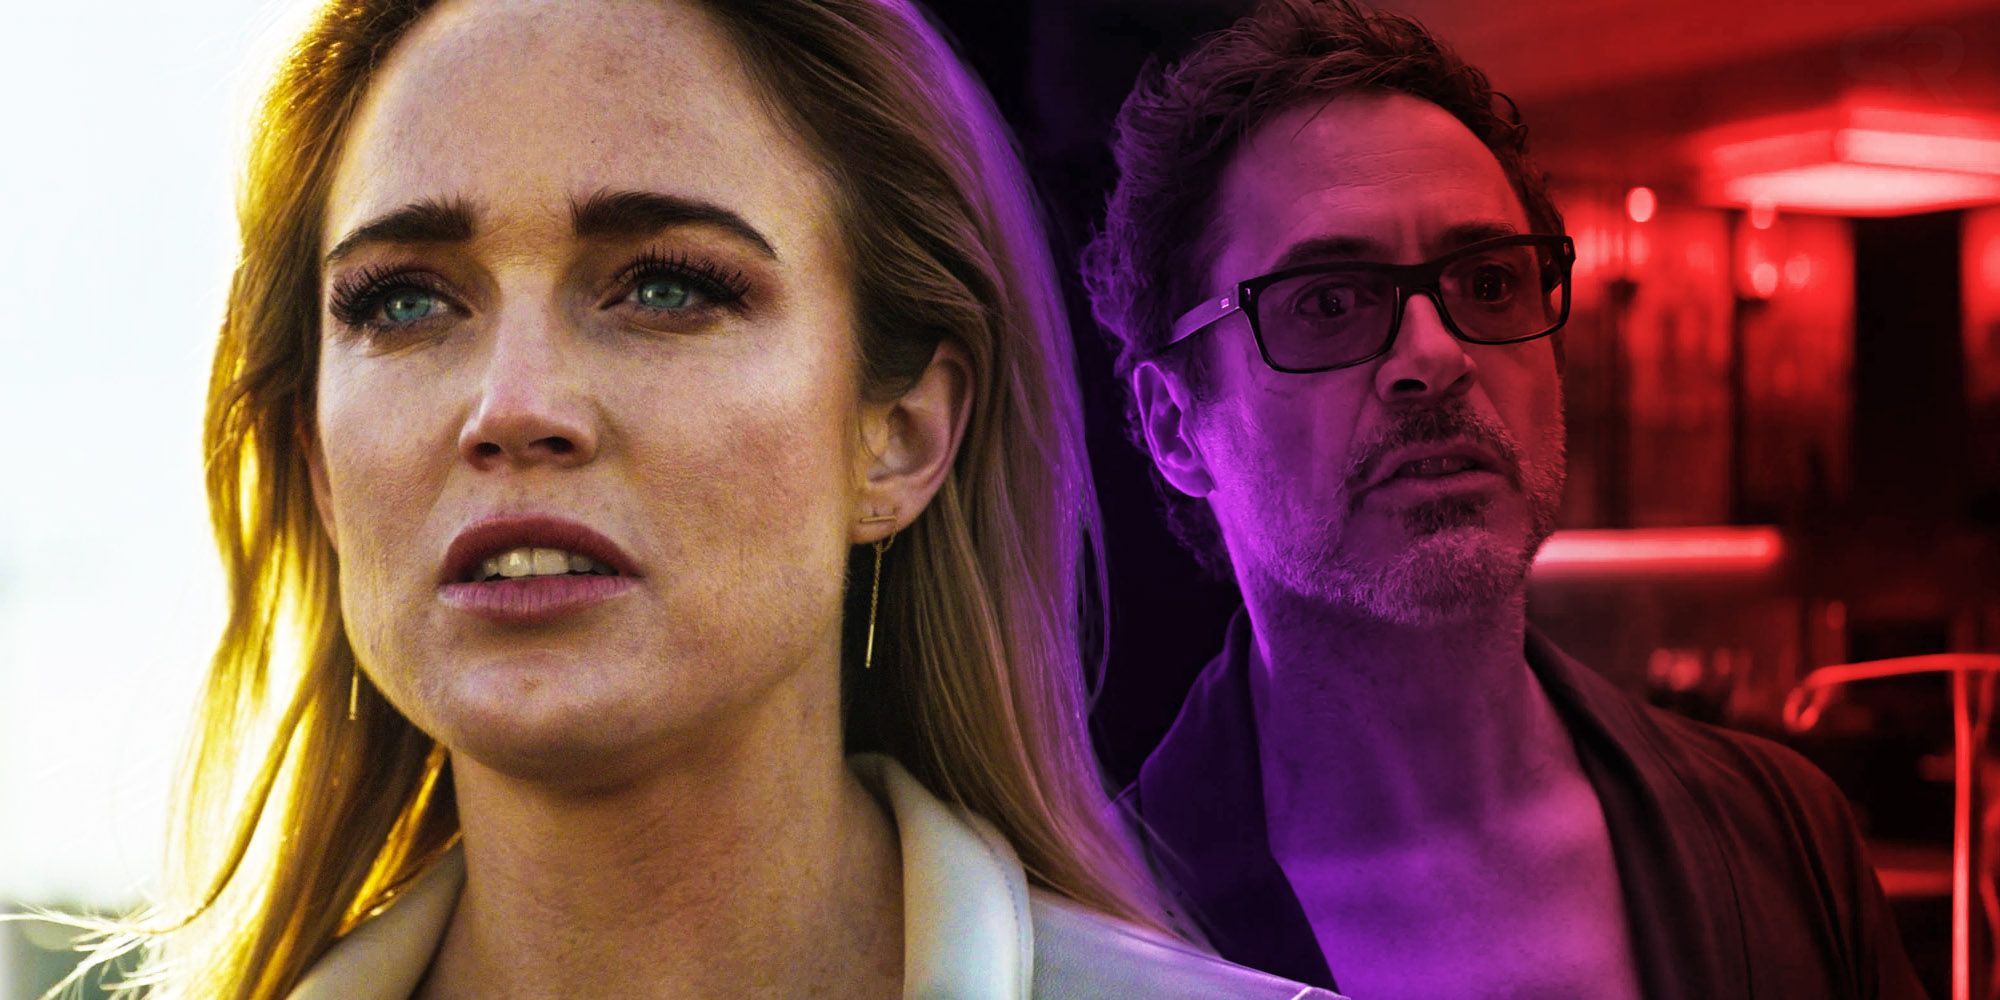 Sara lance white canary Legends of tomorrow Avengers Tony Stark Avengers endgame